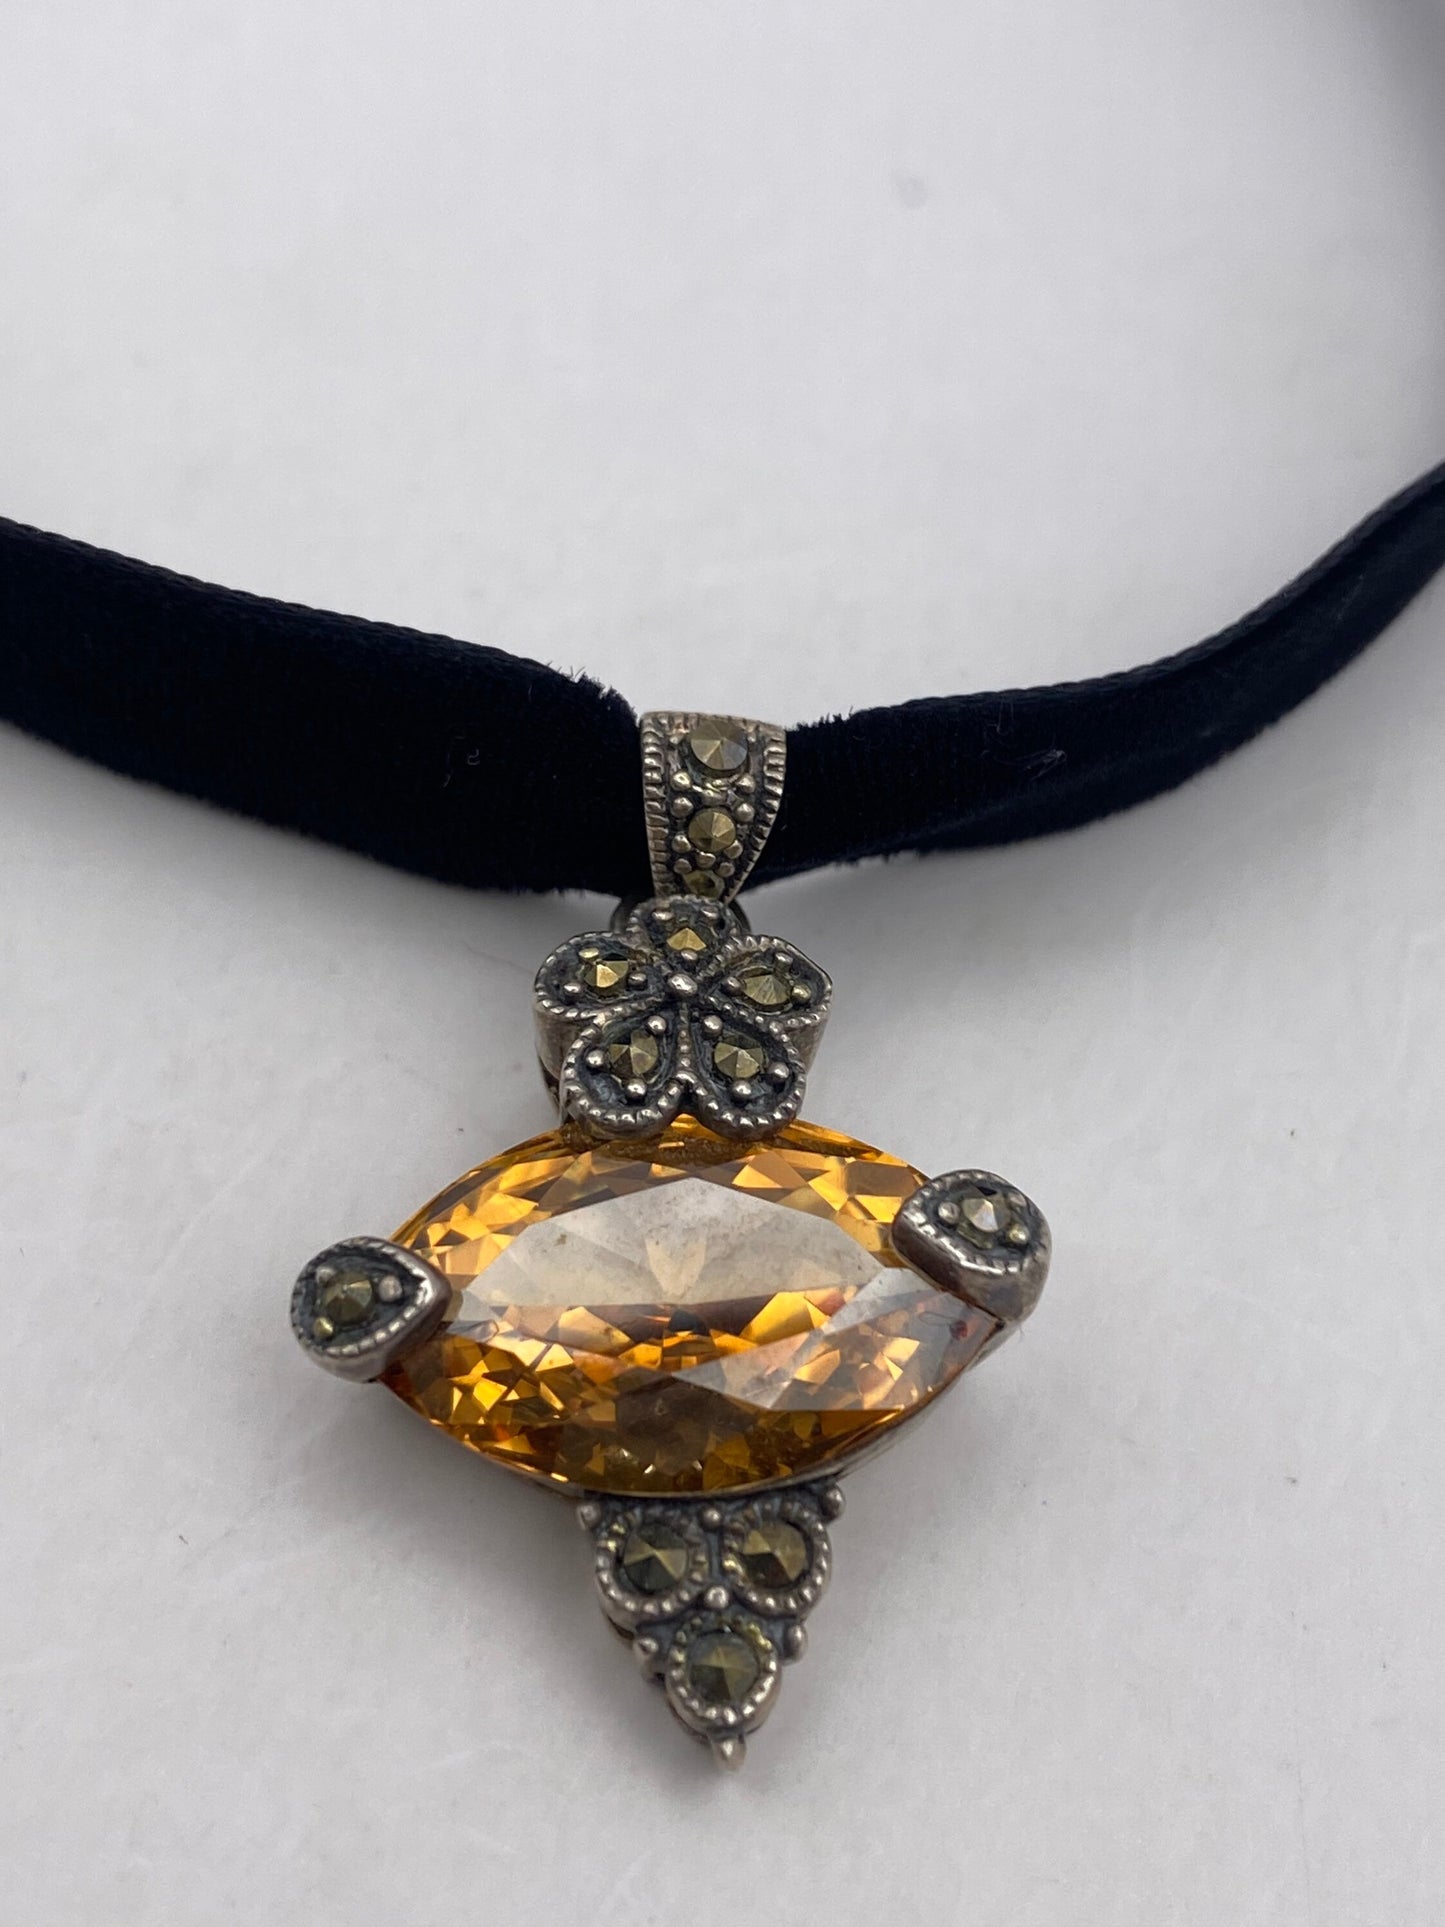 Vintage Amber Crystal Marcasite 925 Sterling Silver Pendant Necklace